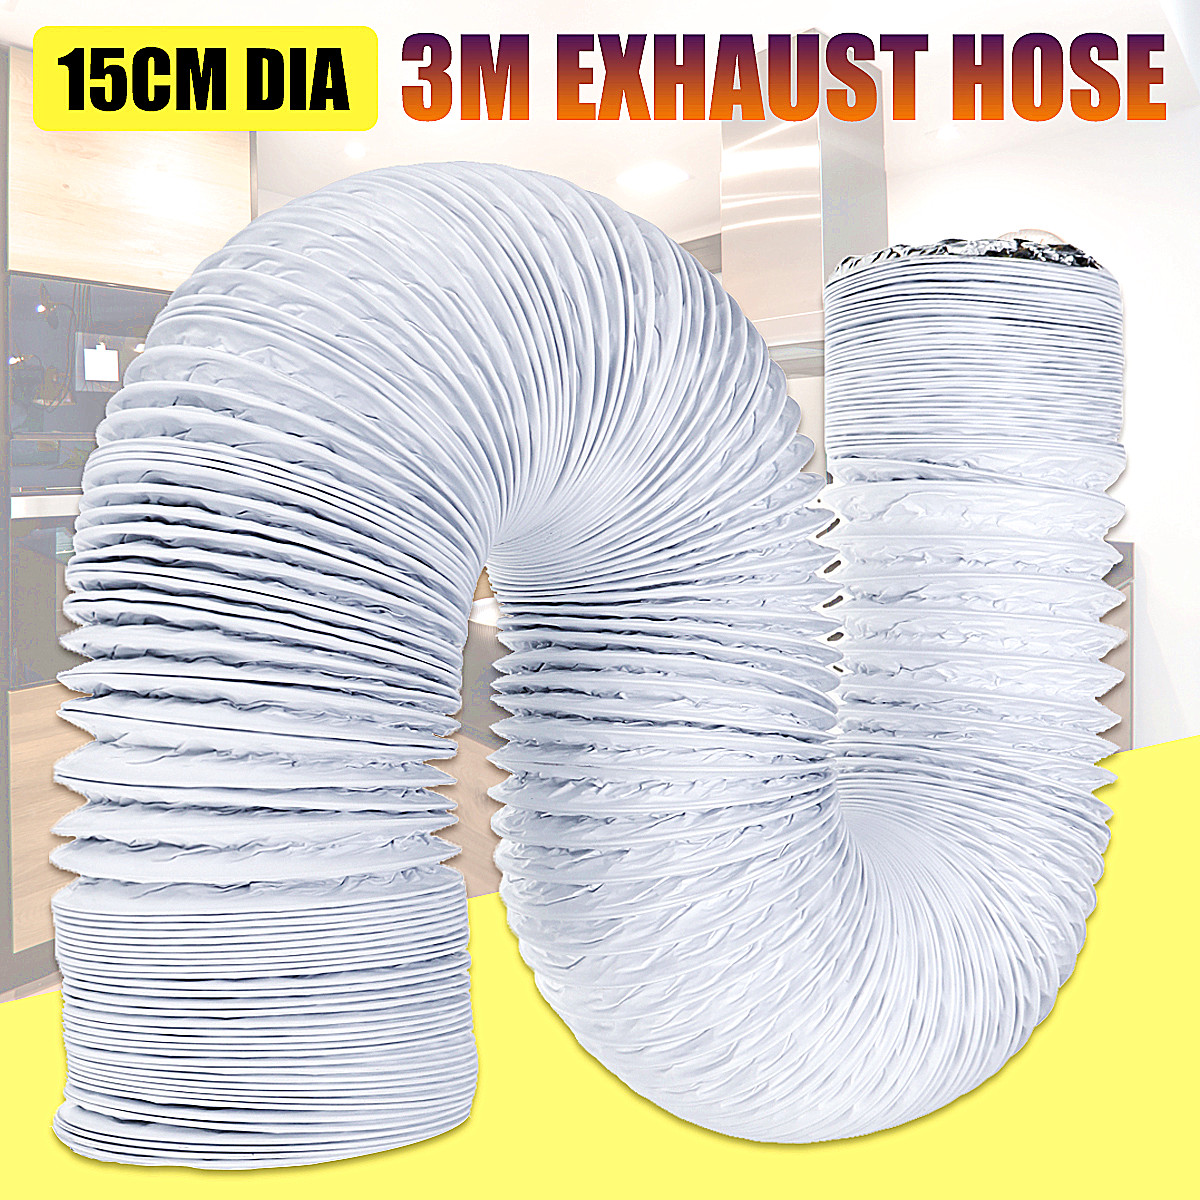 3M-15cm-Dia-Exhaust-Hose-PVC-Flexible-Ducting-Air-Conditioner-Exhaust-Hose-Replacement-Duct-Outlet-1336411-2